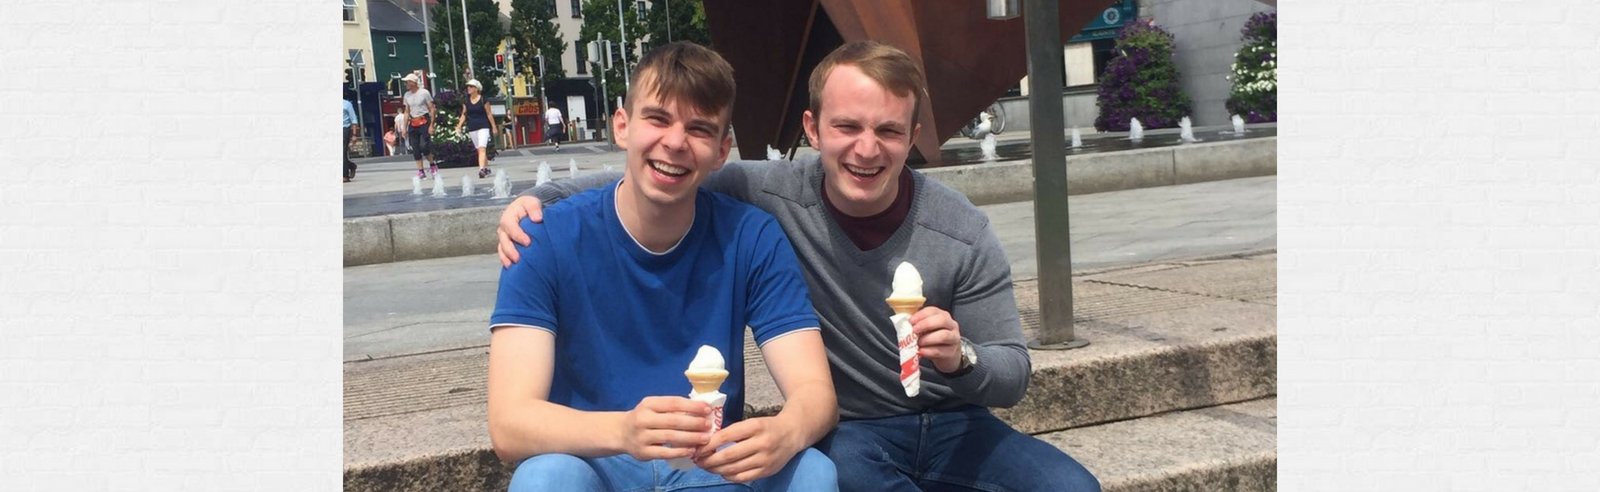 Irish people love Ice Cream